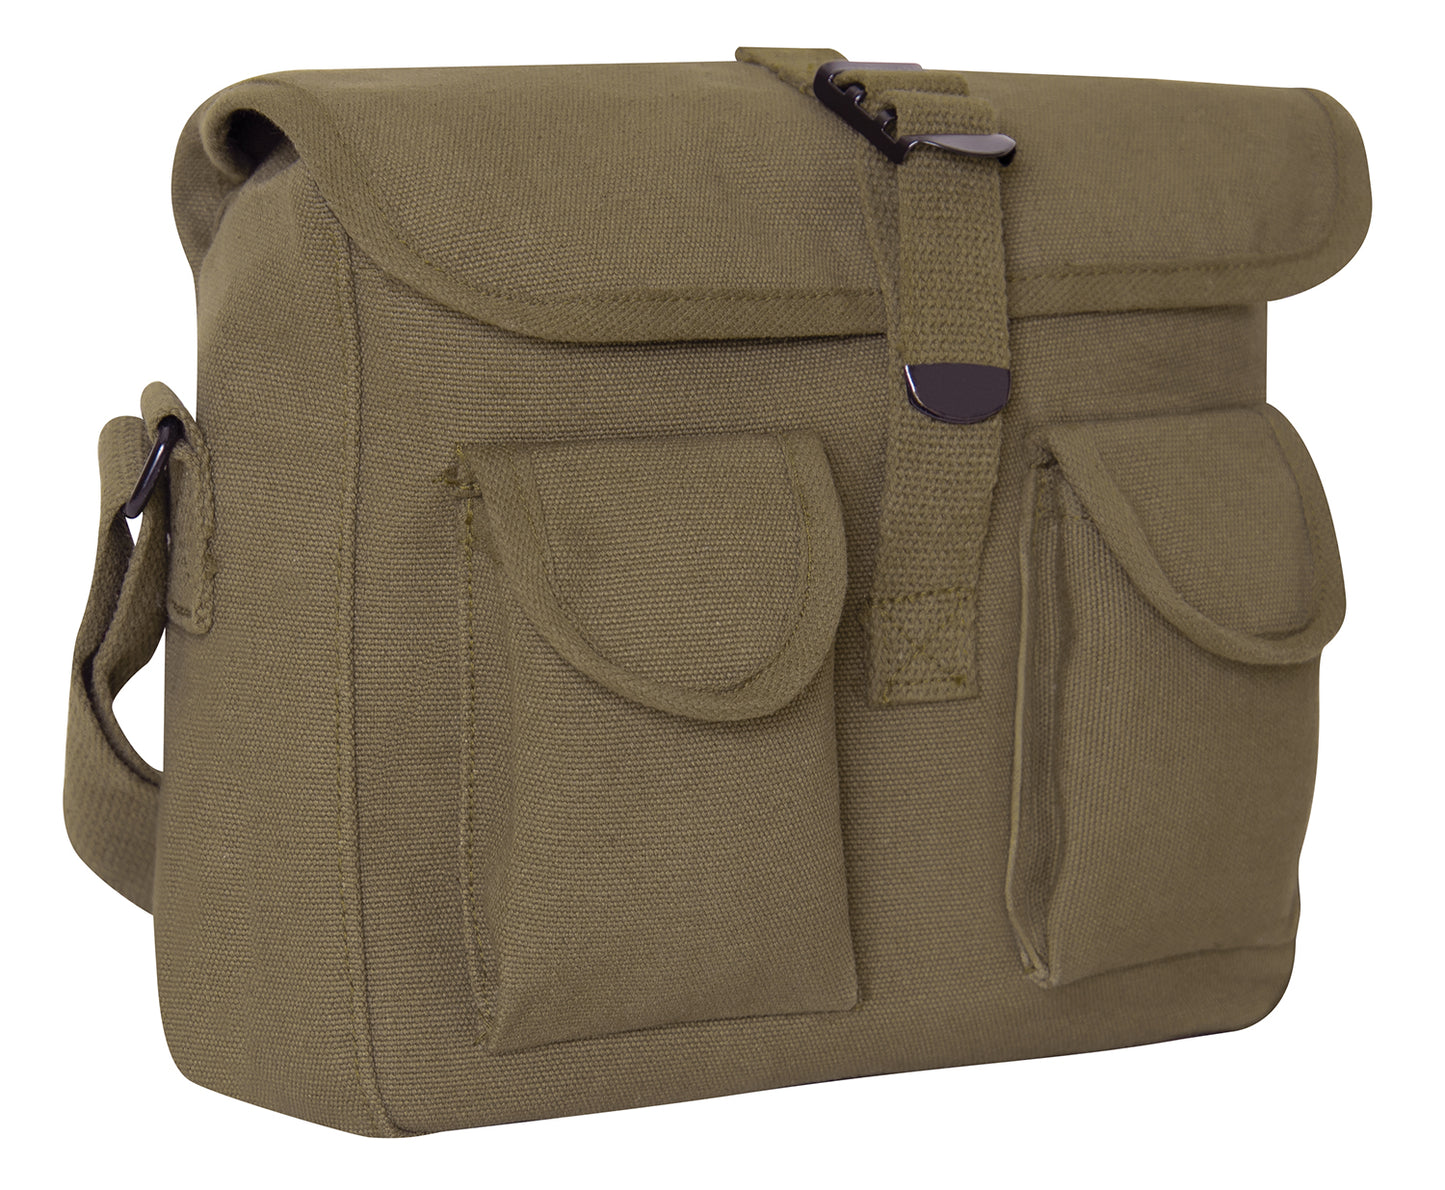 Milspec Canvas Ammo Shoulder Bag Sneak Previews MilTac Tactical Military Outdoor Gear Australia